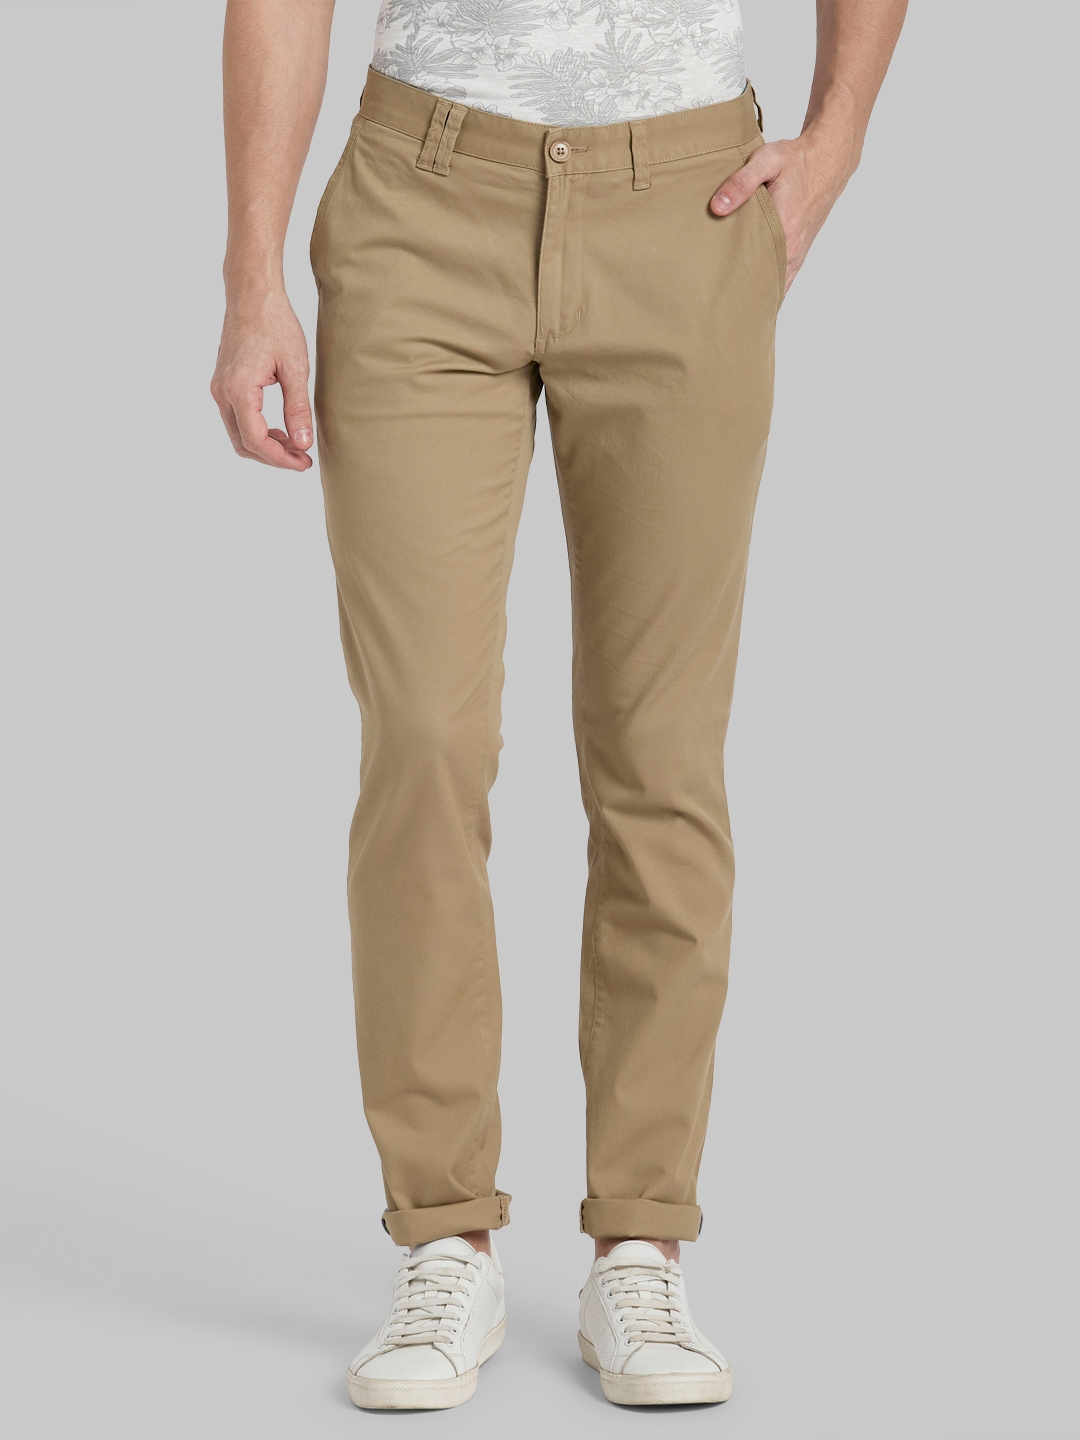 Parx Medium Khaki Trouser